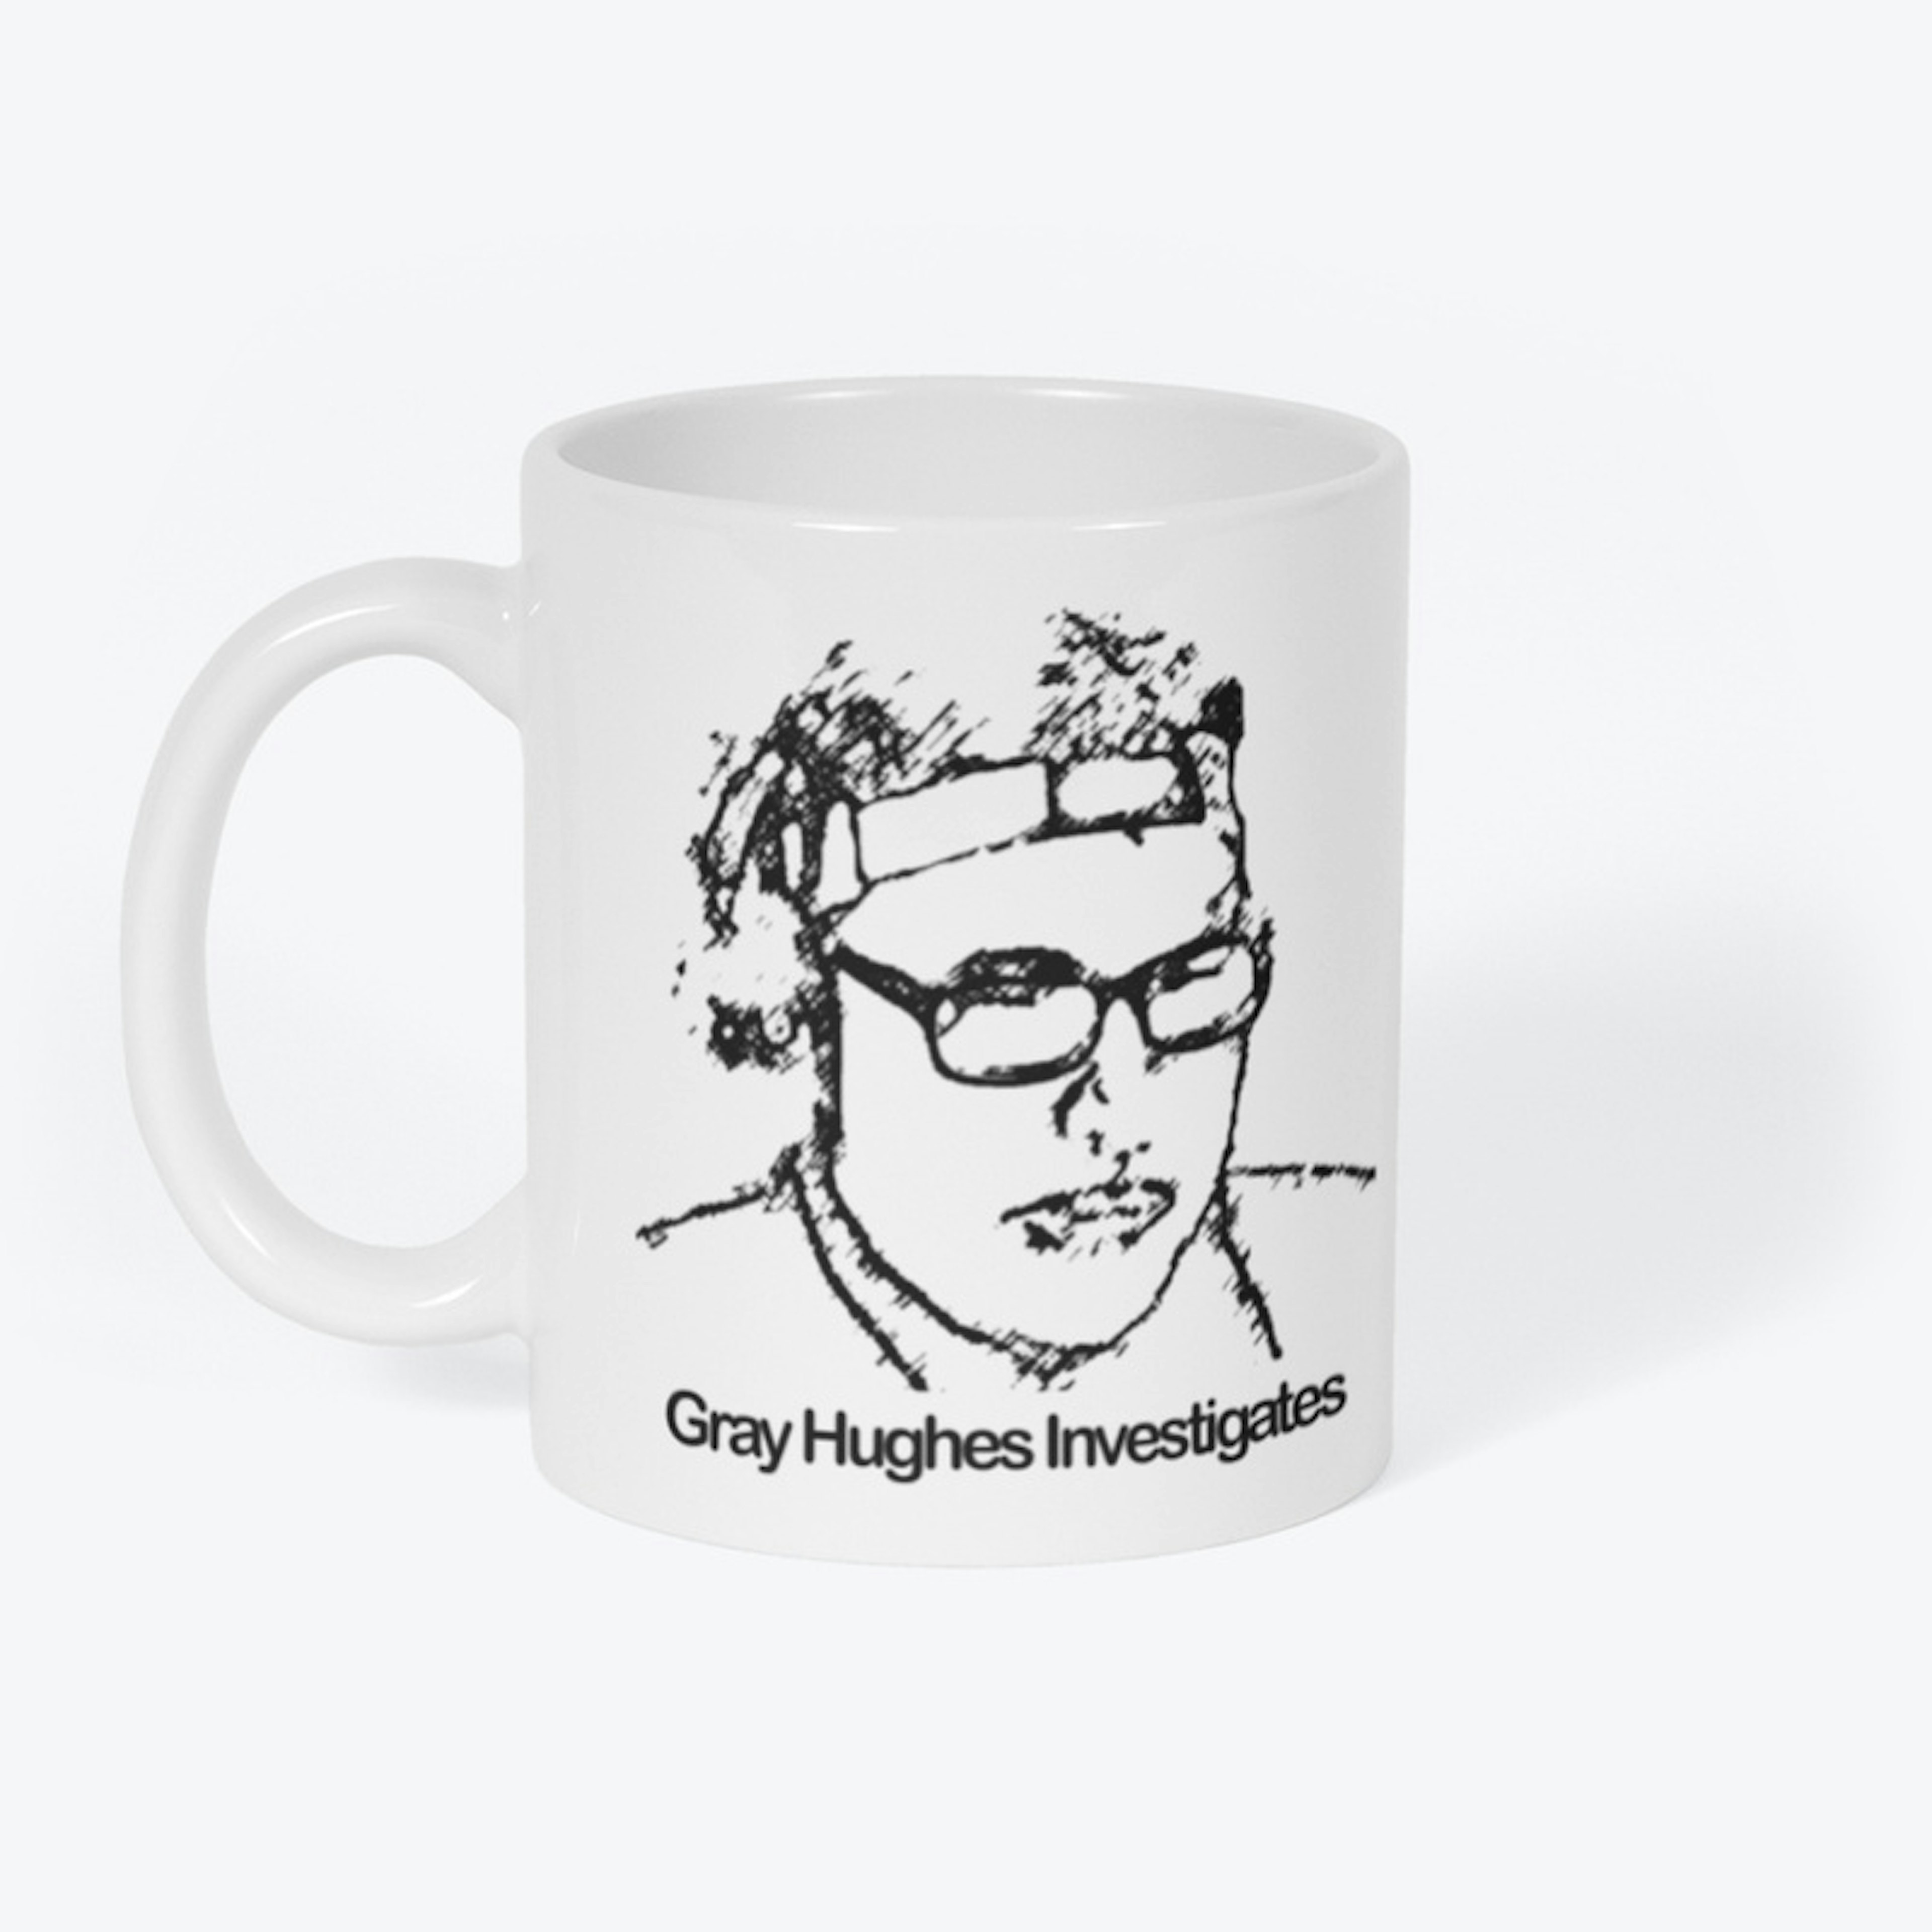 Gray Hughes Investigates mug